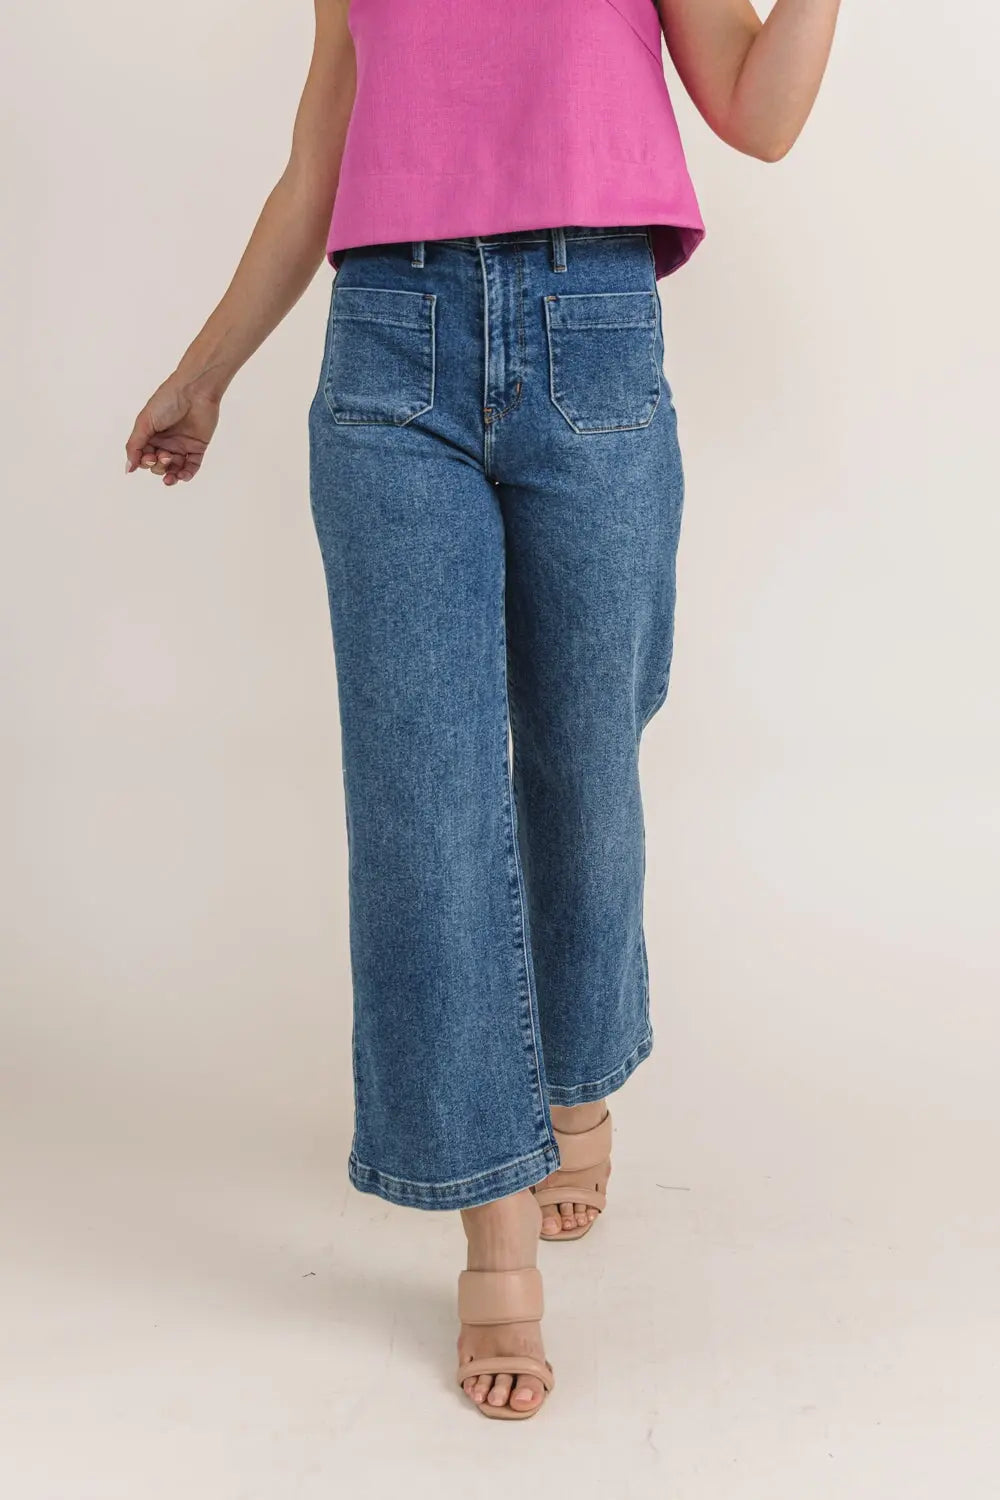 Women Blue Denim Side Patch Pockets Jeans at Rs 1061.00